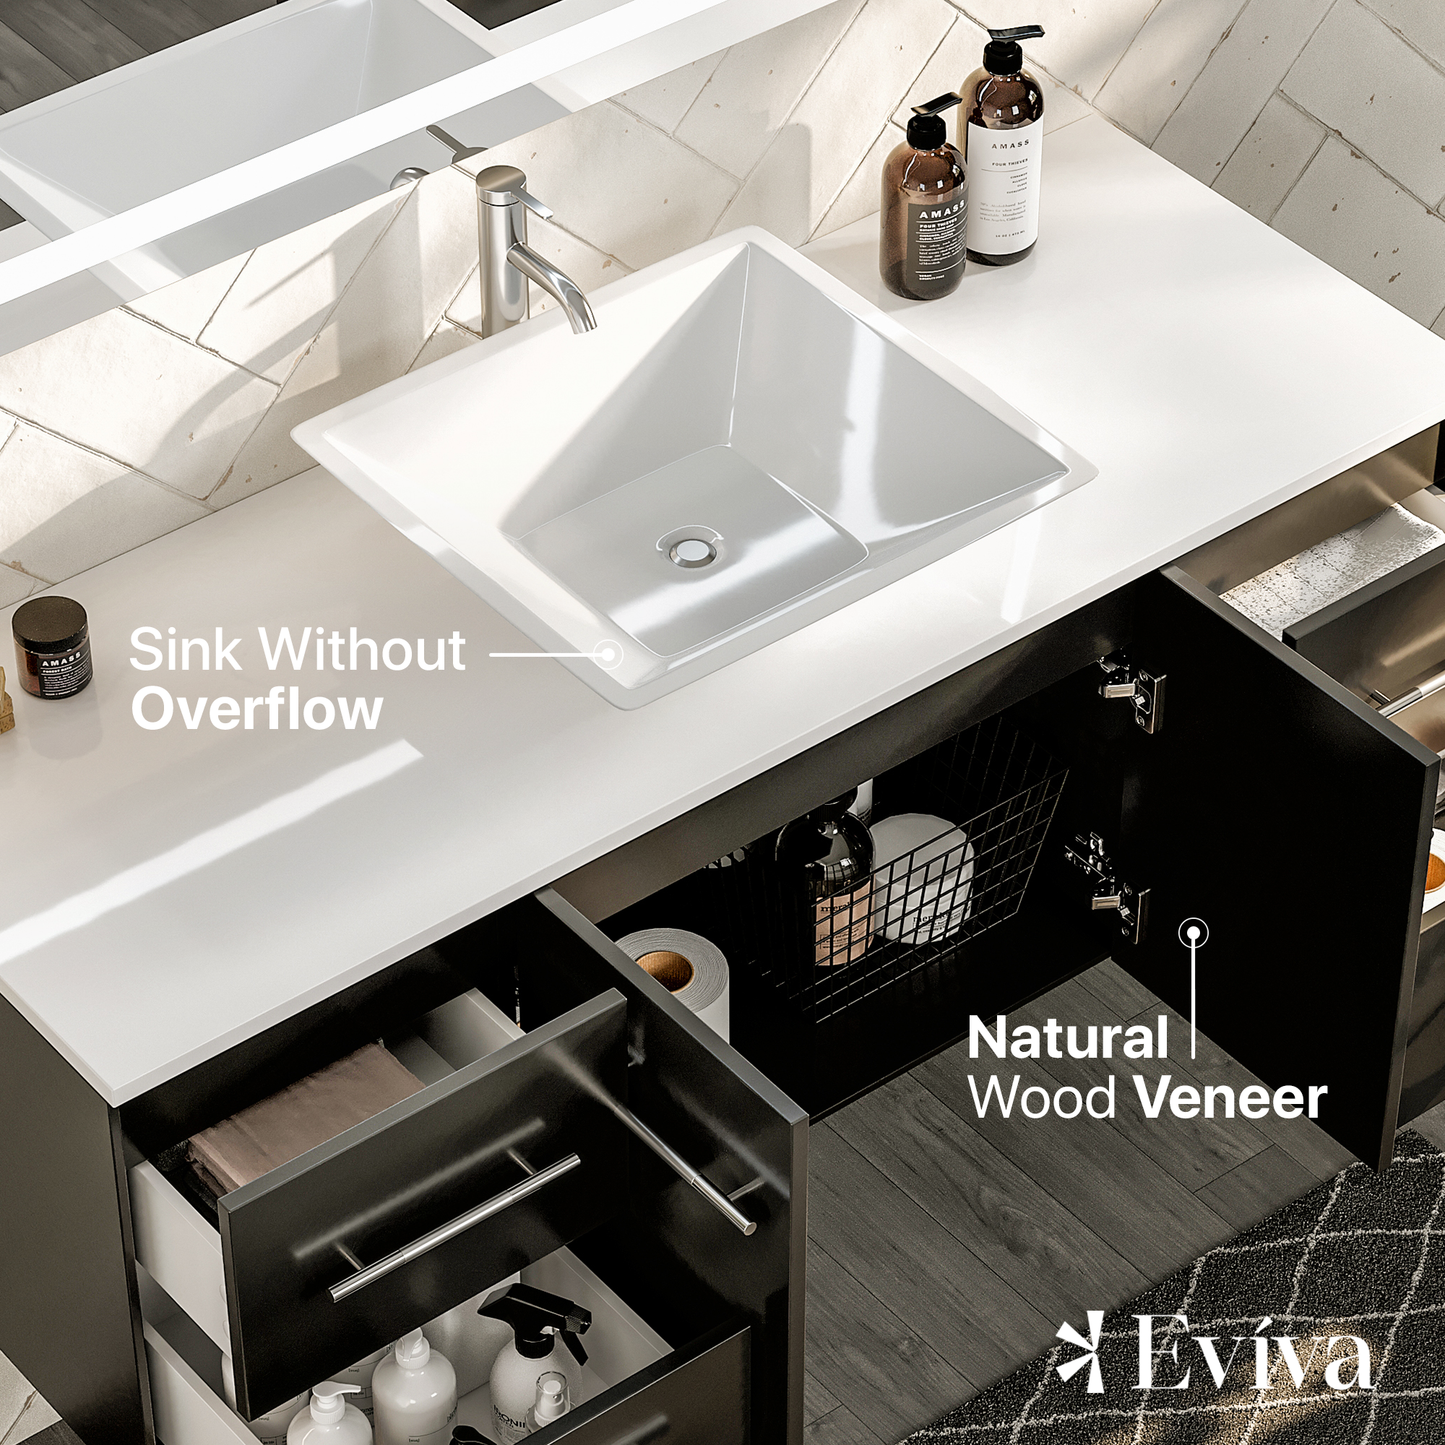 Wave 48"W x 22"D Espresso Bathroom Vanity with White Quartz Countertop and Vessel Porcelain Sink